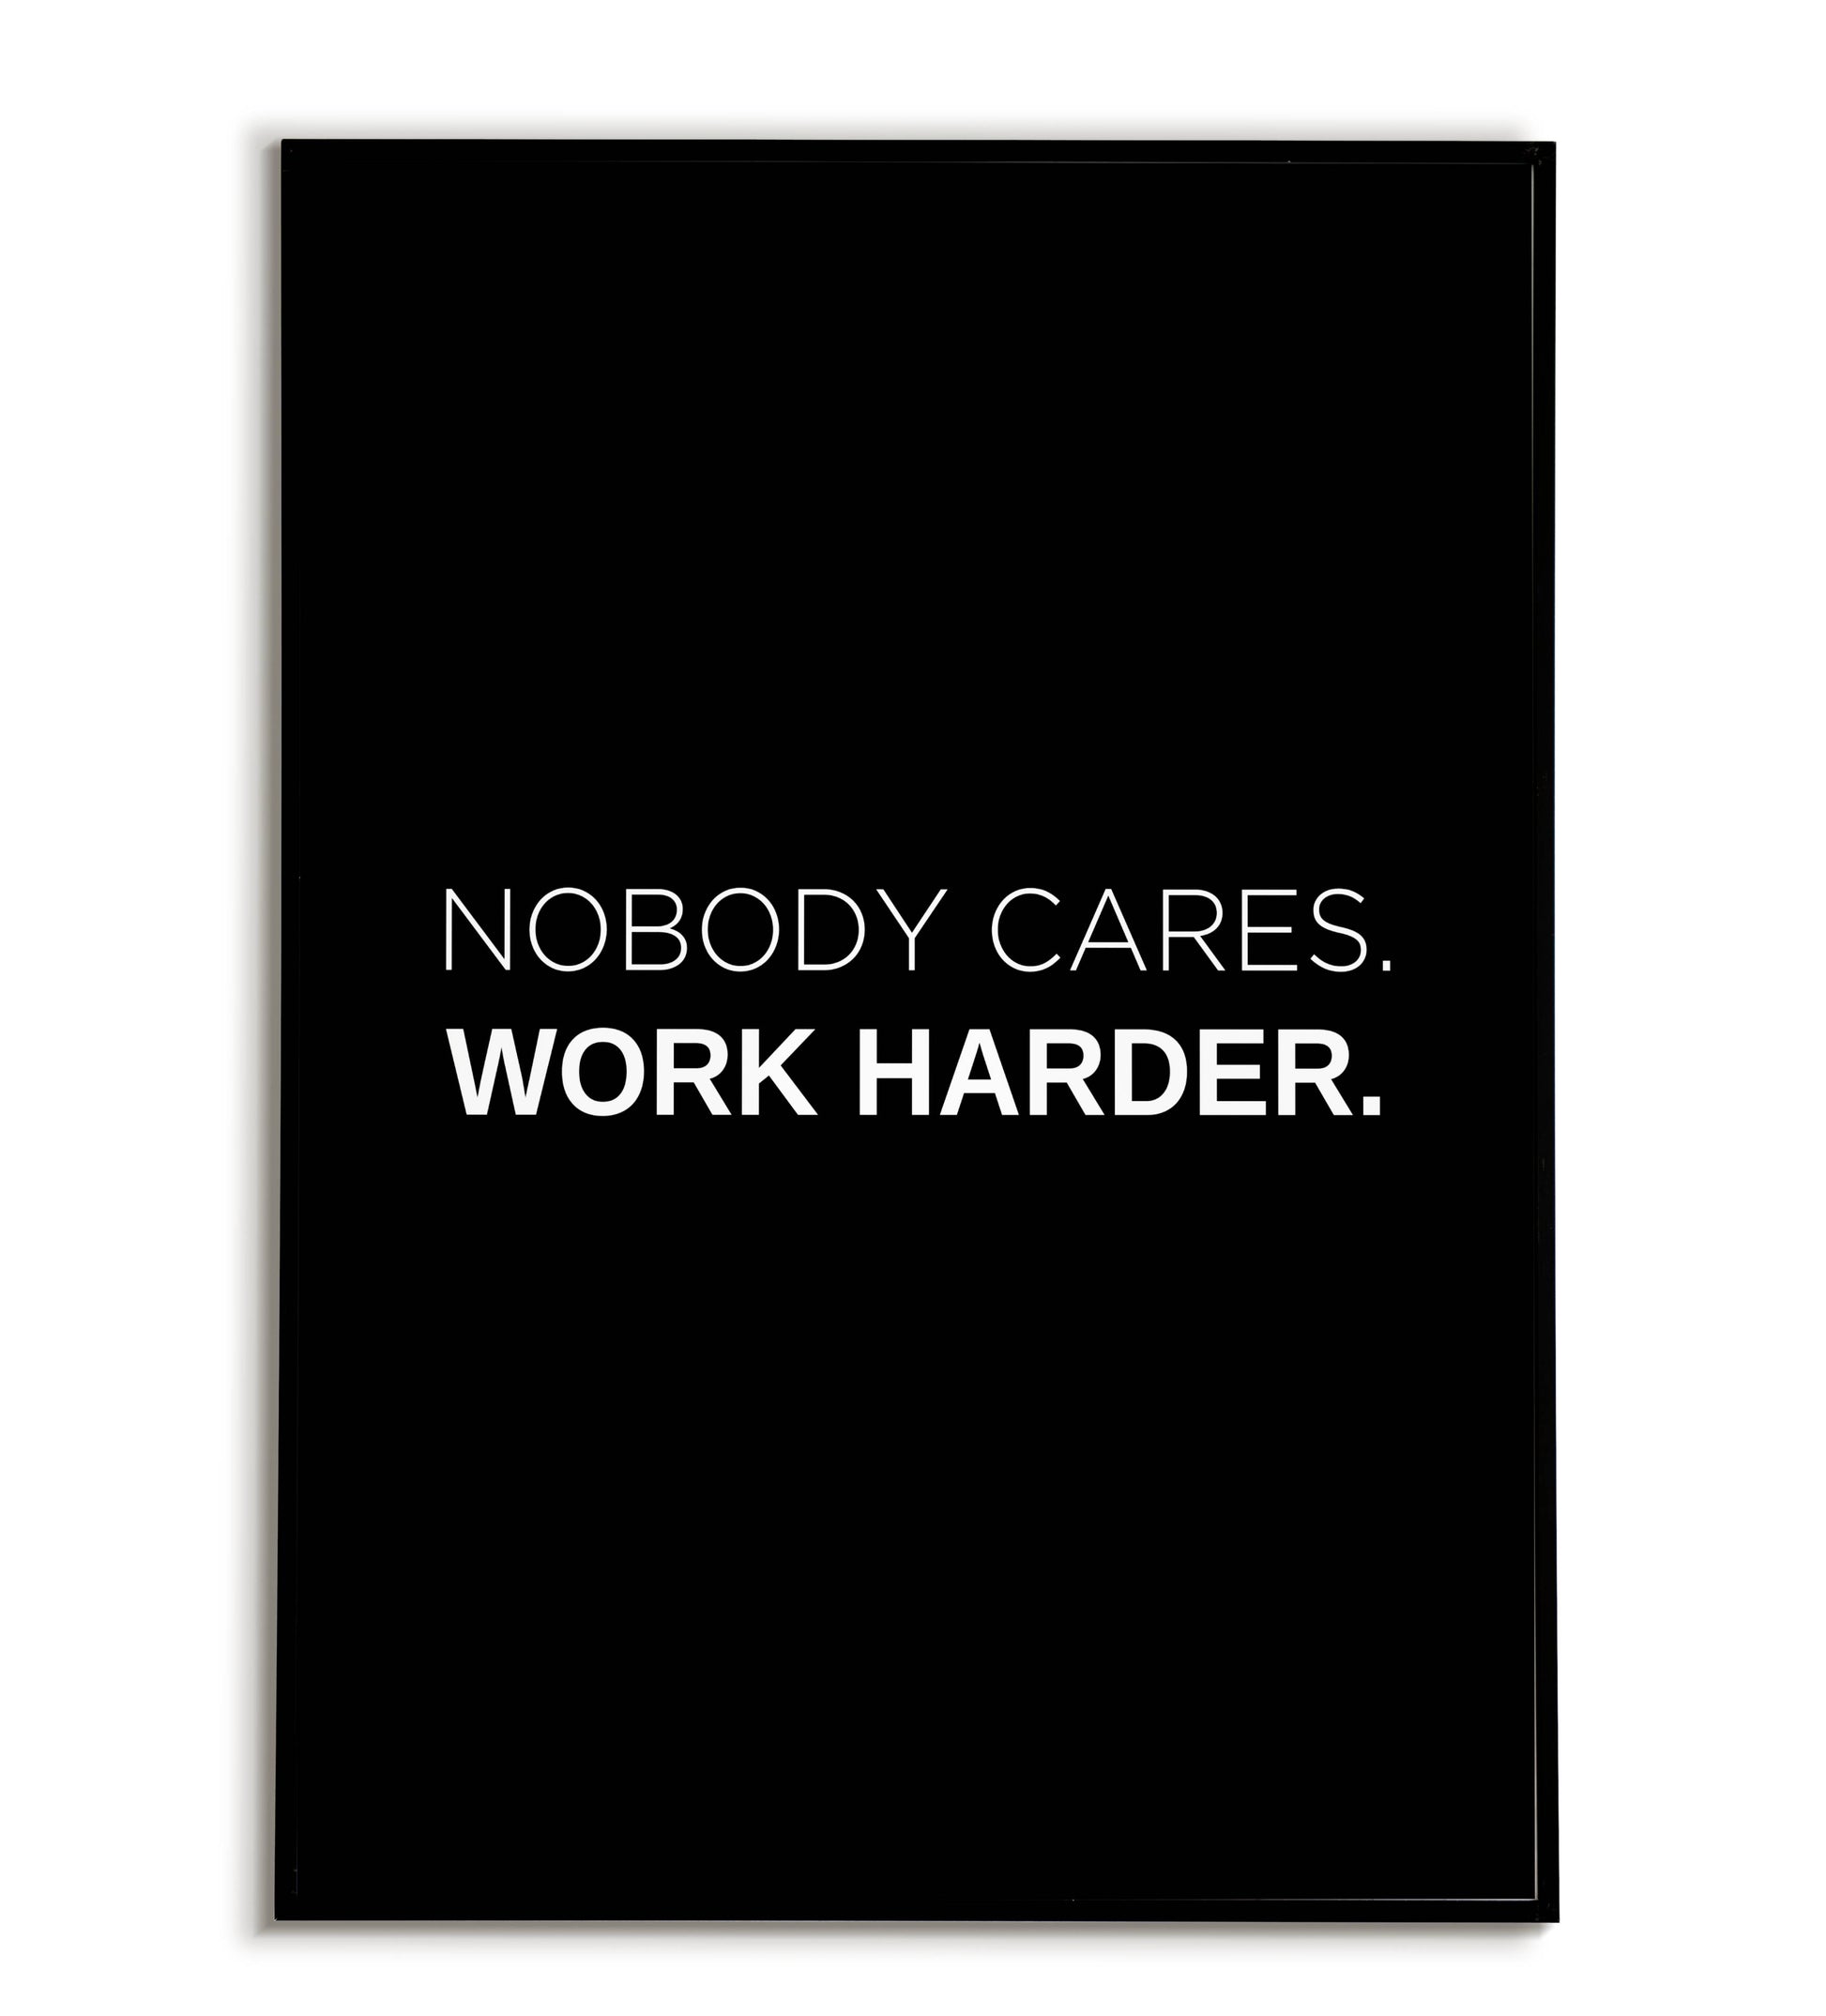 "Nobody cares work harder" printable motivational poster.